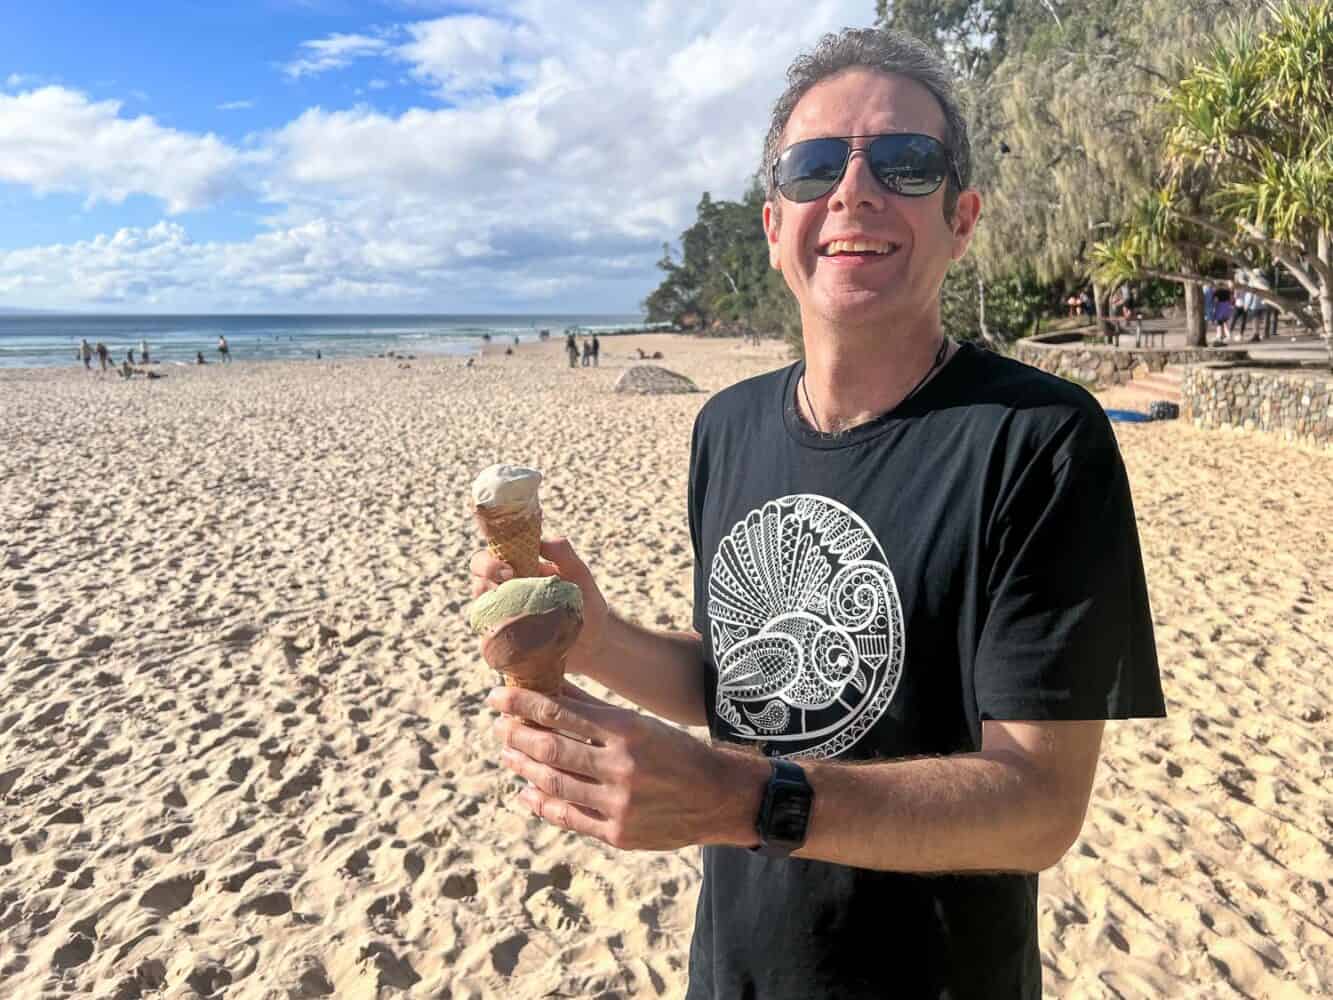 Simon with gelatos from Massimo’s Gelateria, Noosa, Queensland, Australia